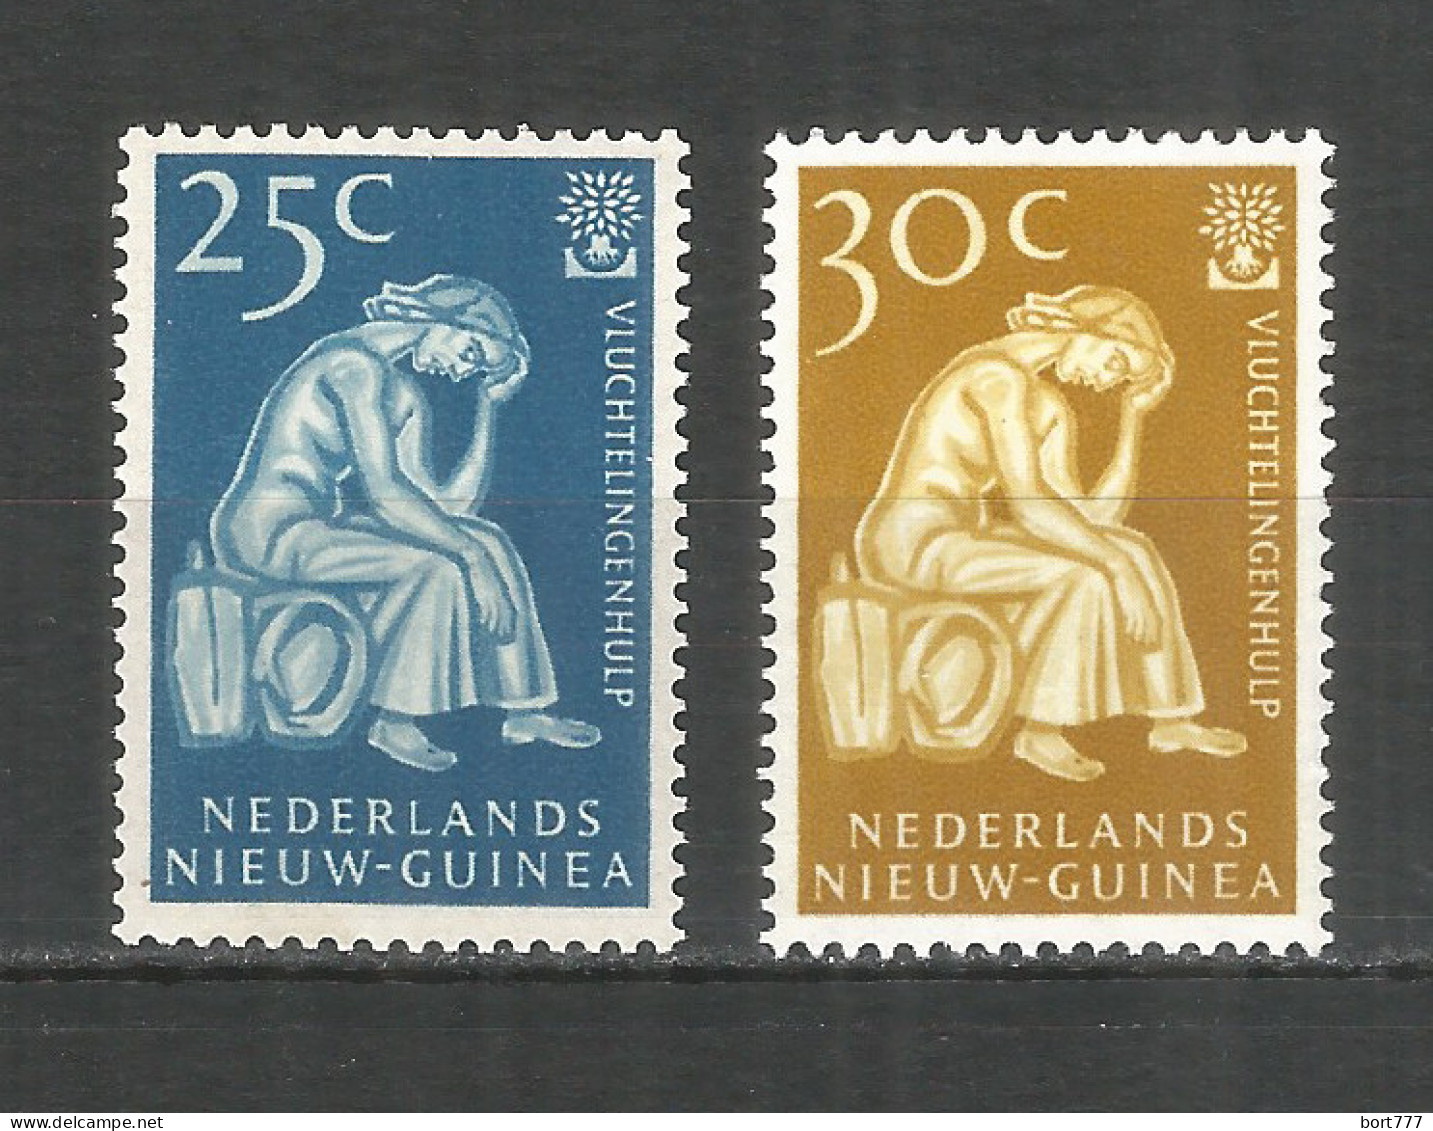 Netherlands New Guinea 1960 Mint Stamps MNH (**) Mi.# 61-62 - Netherlands New Guinea